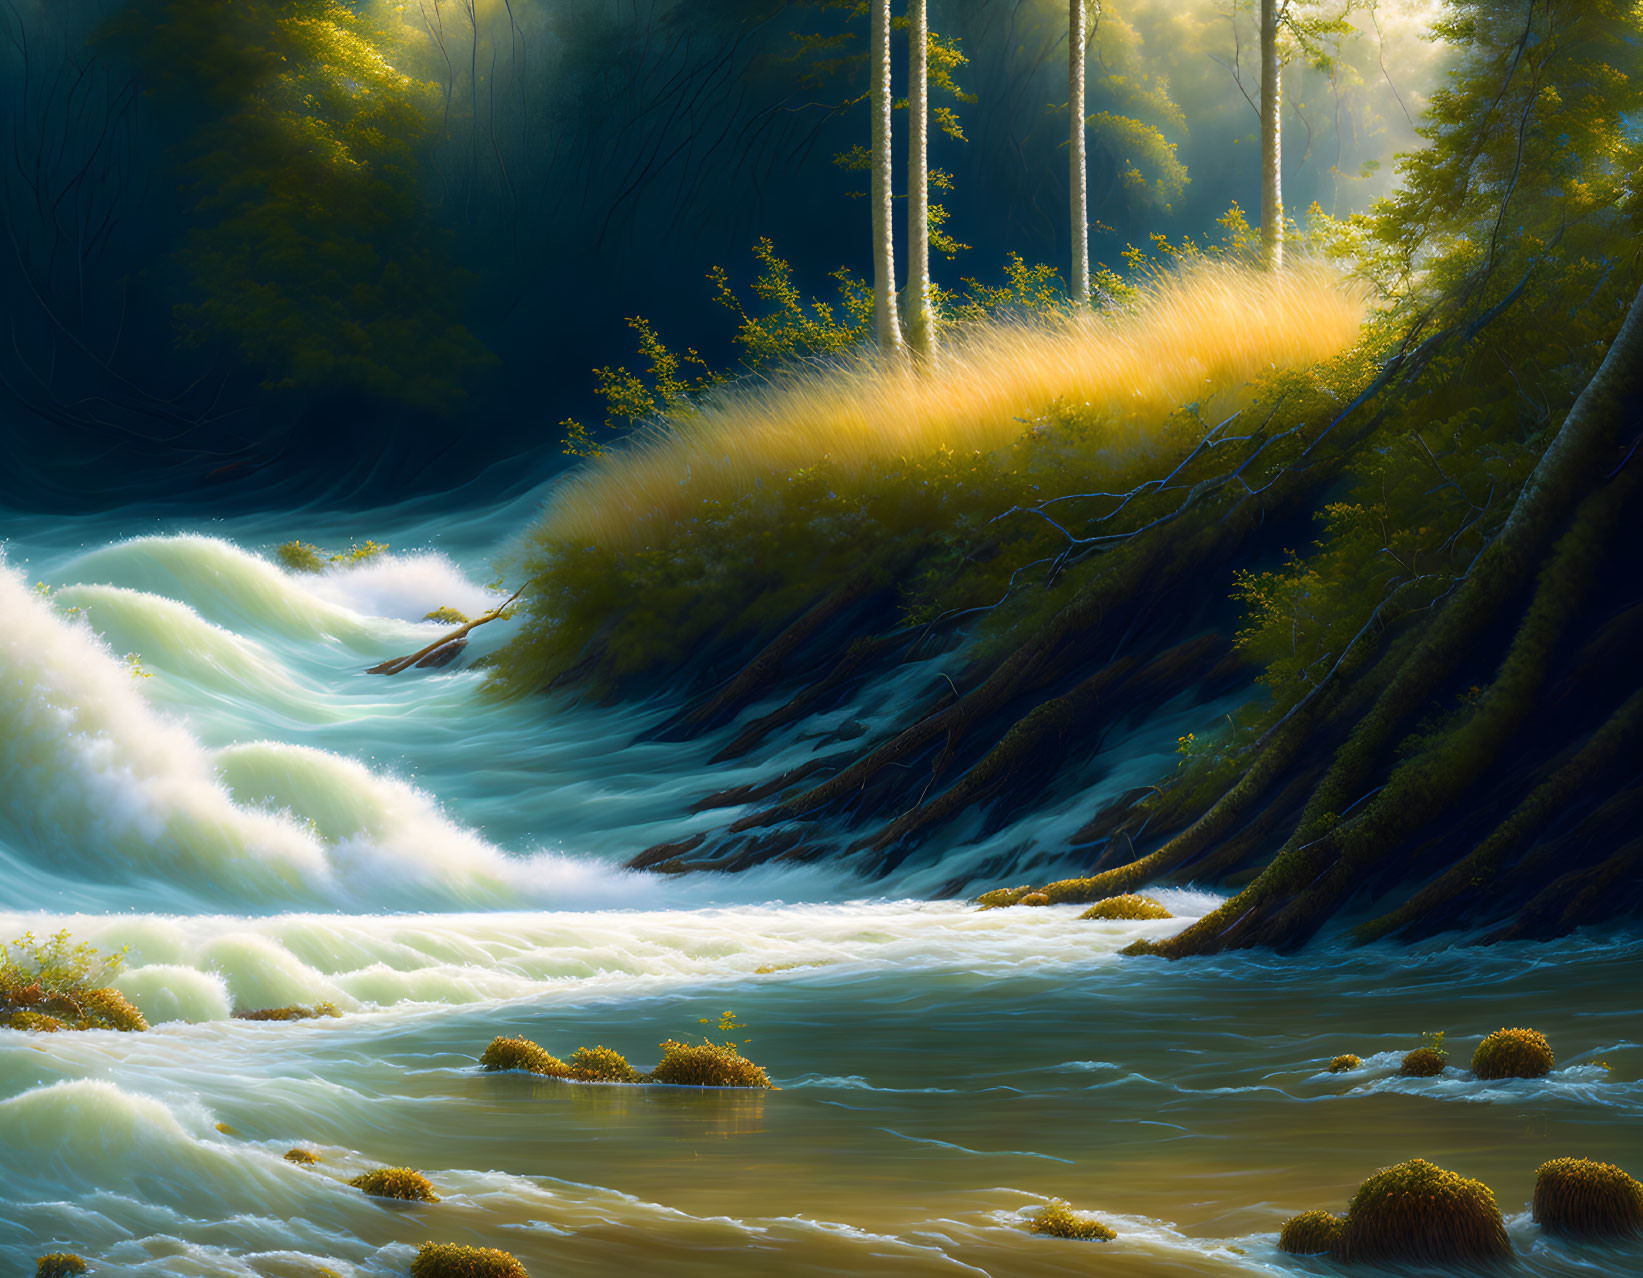 Digital painting: Sunlit forest, river scene